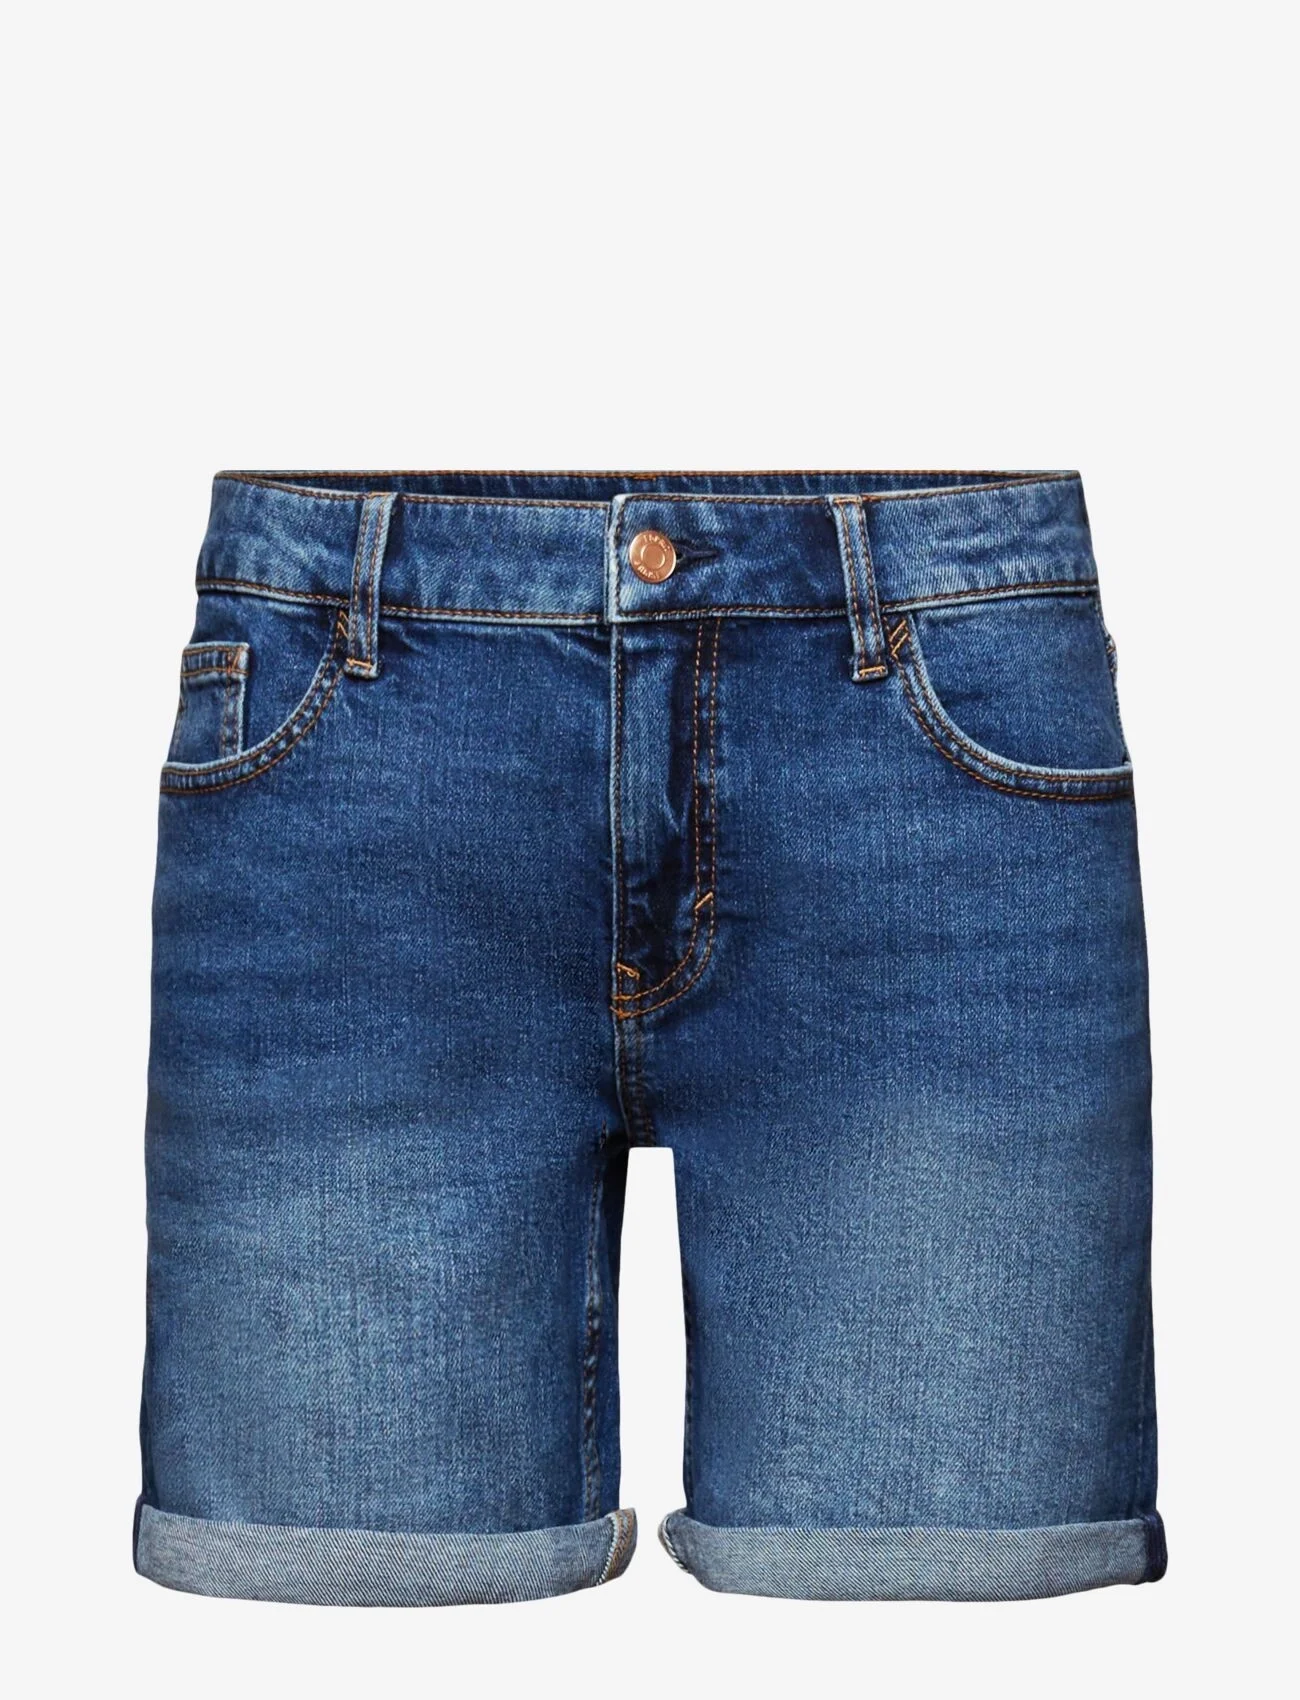 Esprit Casual - Shorts denim - denim shorts - blue medium wash - 1